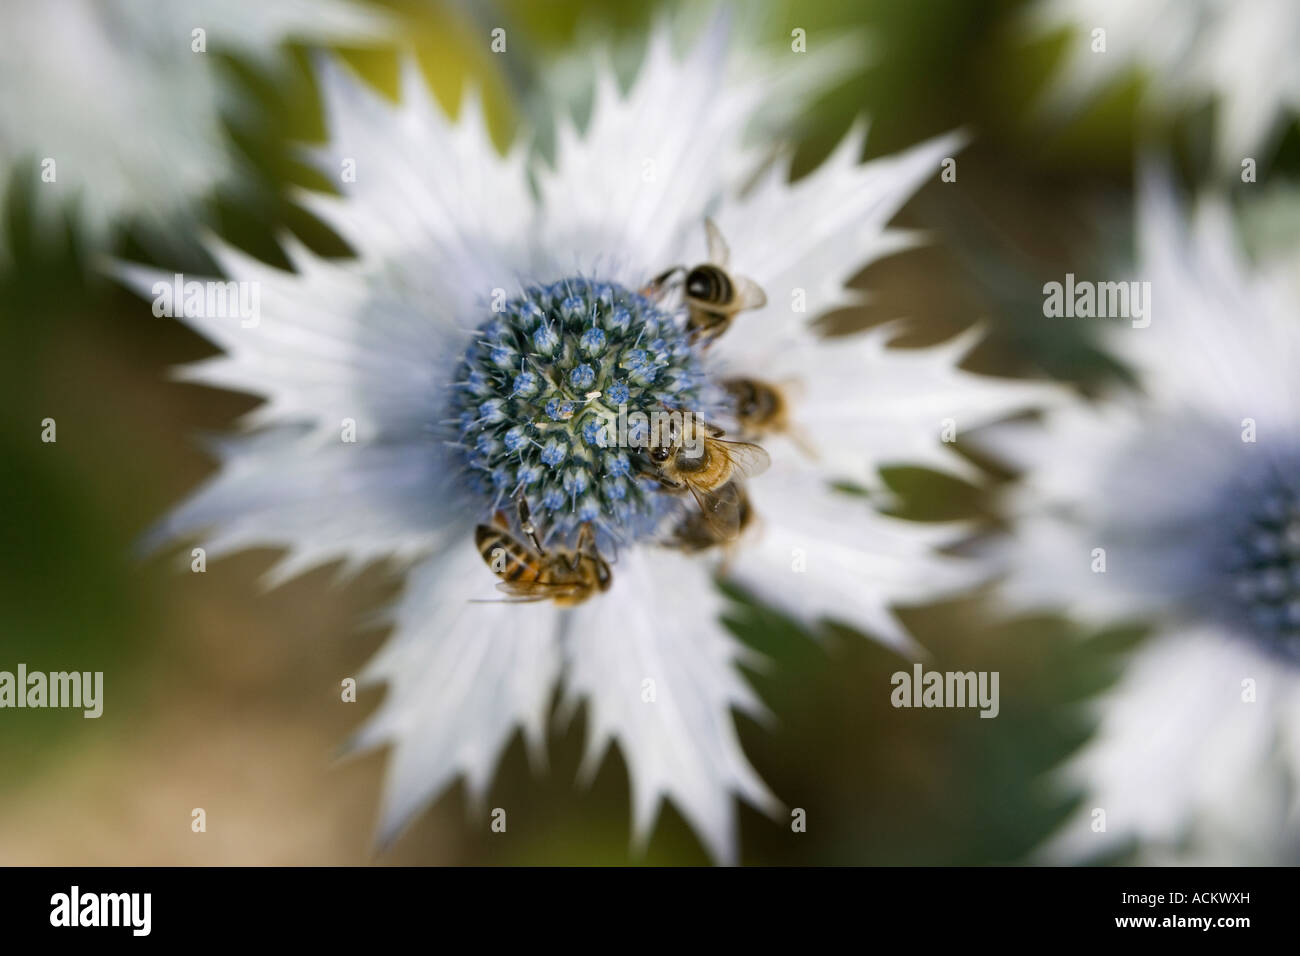 Honey Bees on an Eryngium / Sea holly plant Stock Photo